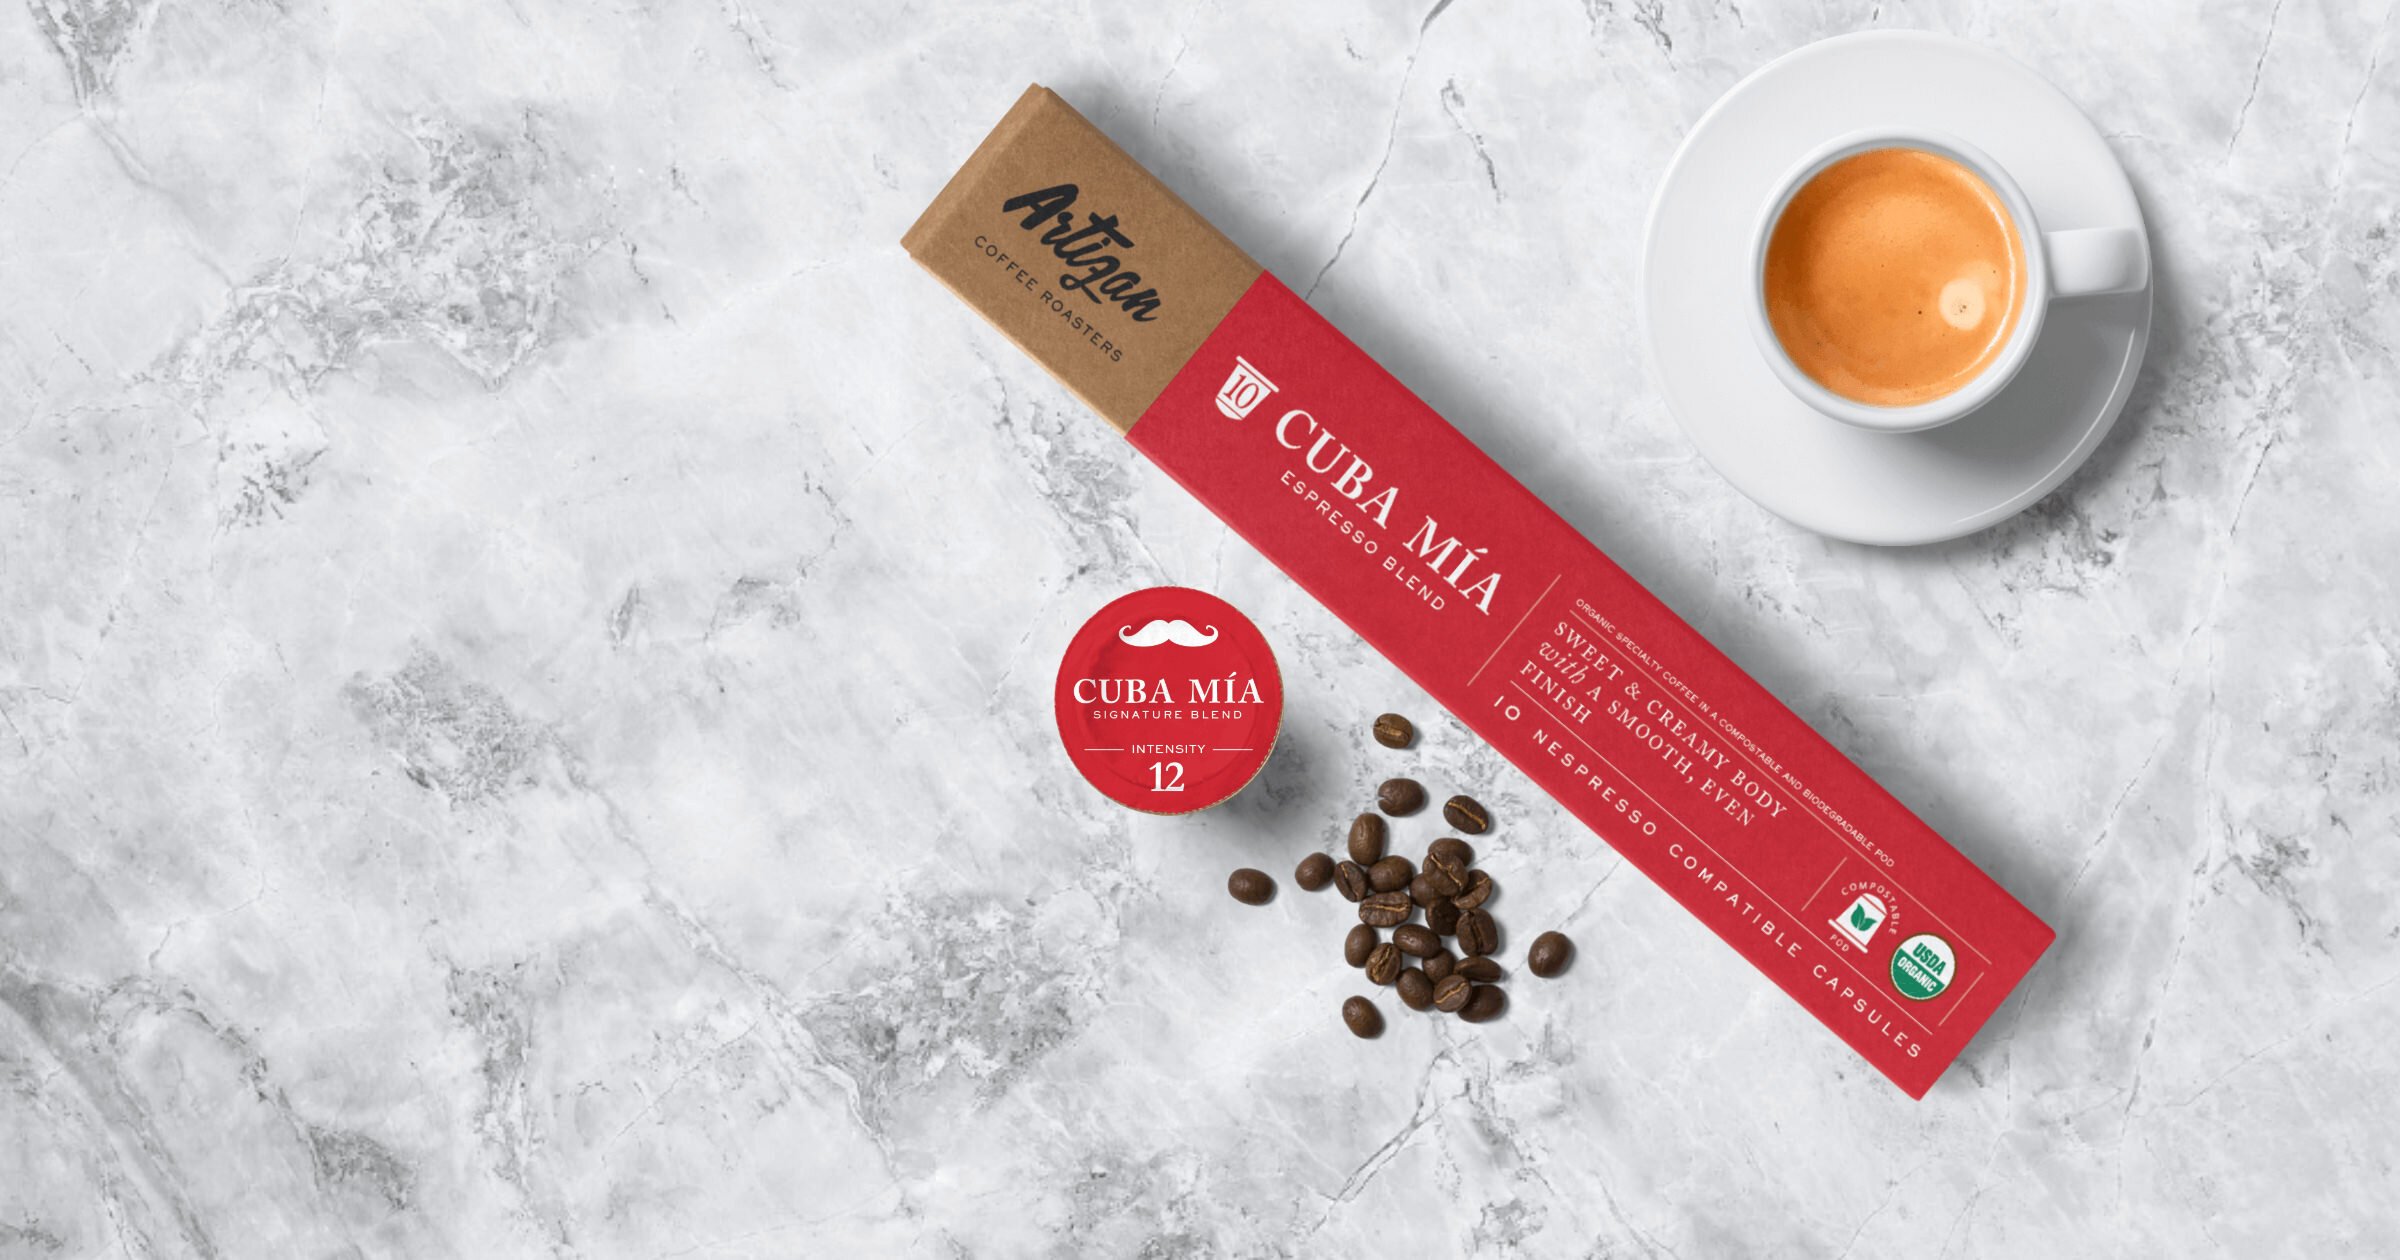 Organic - Sumatra Decaf - Origin - Lungo — Organic Nespresso Pods & Capsules  - USDA Certified - Artizan Coffee